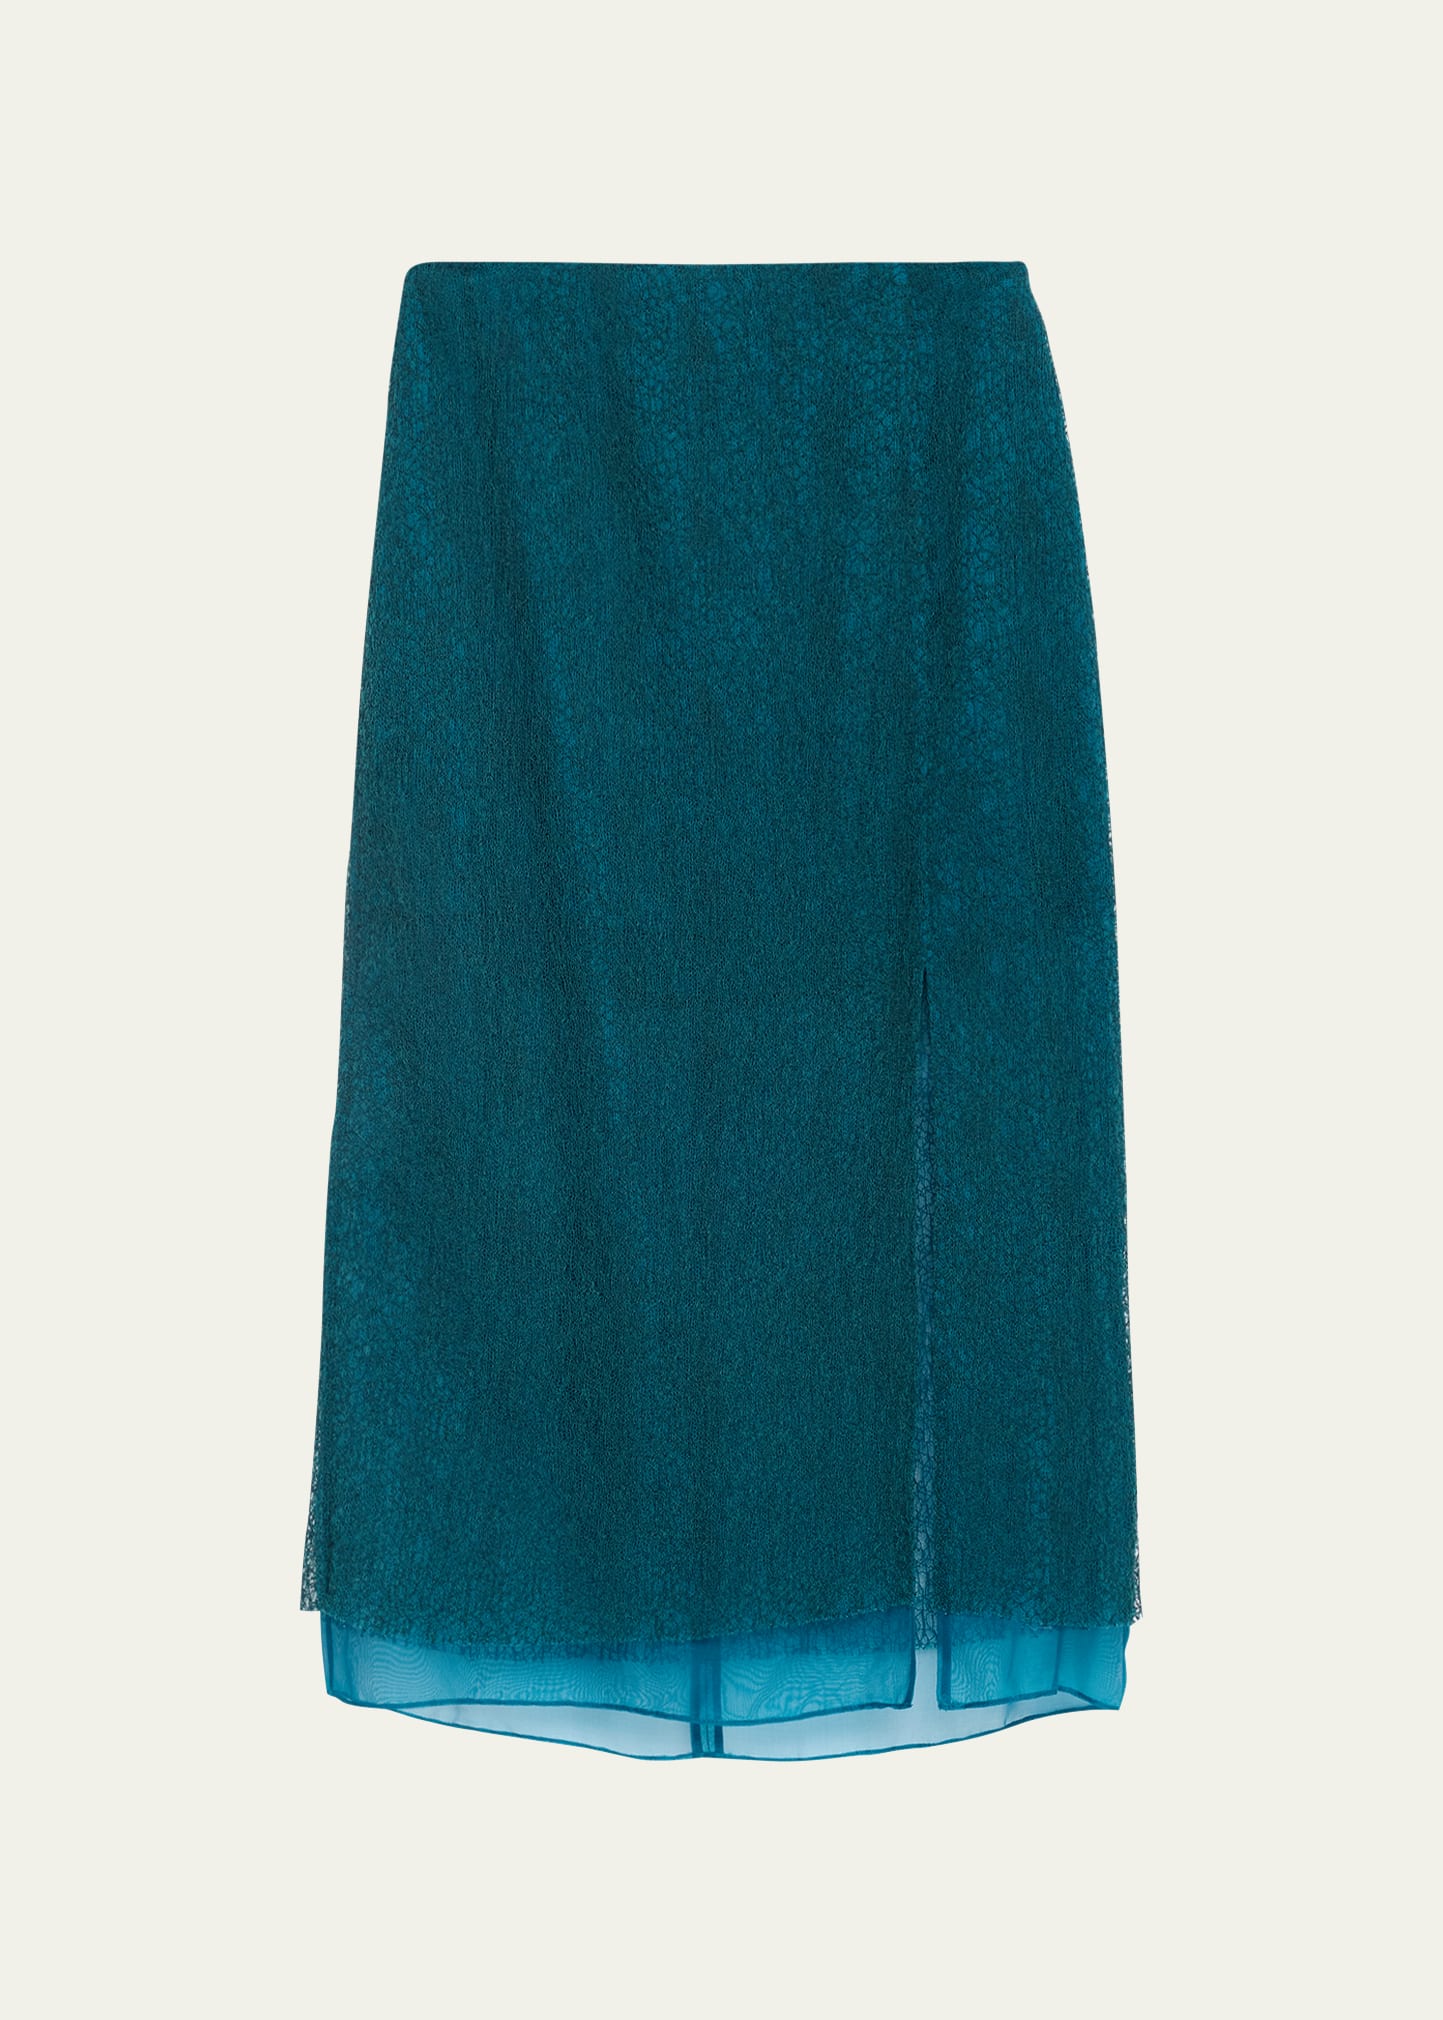 Jason Wu Collection Lace Organza Underlay Midi Skirt In Ocean Seagreen